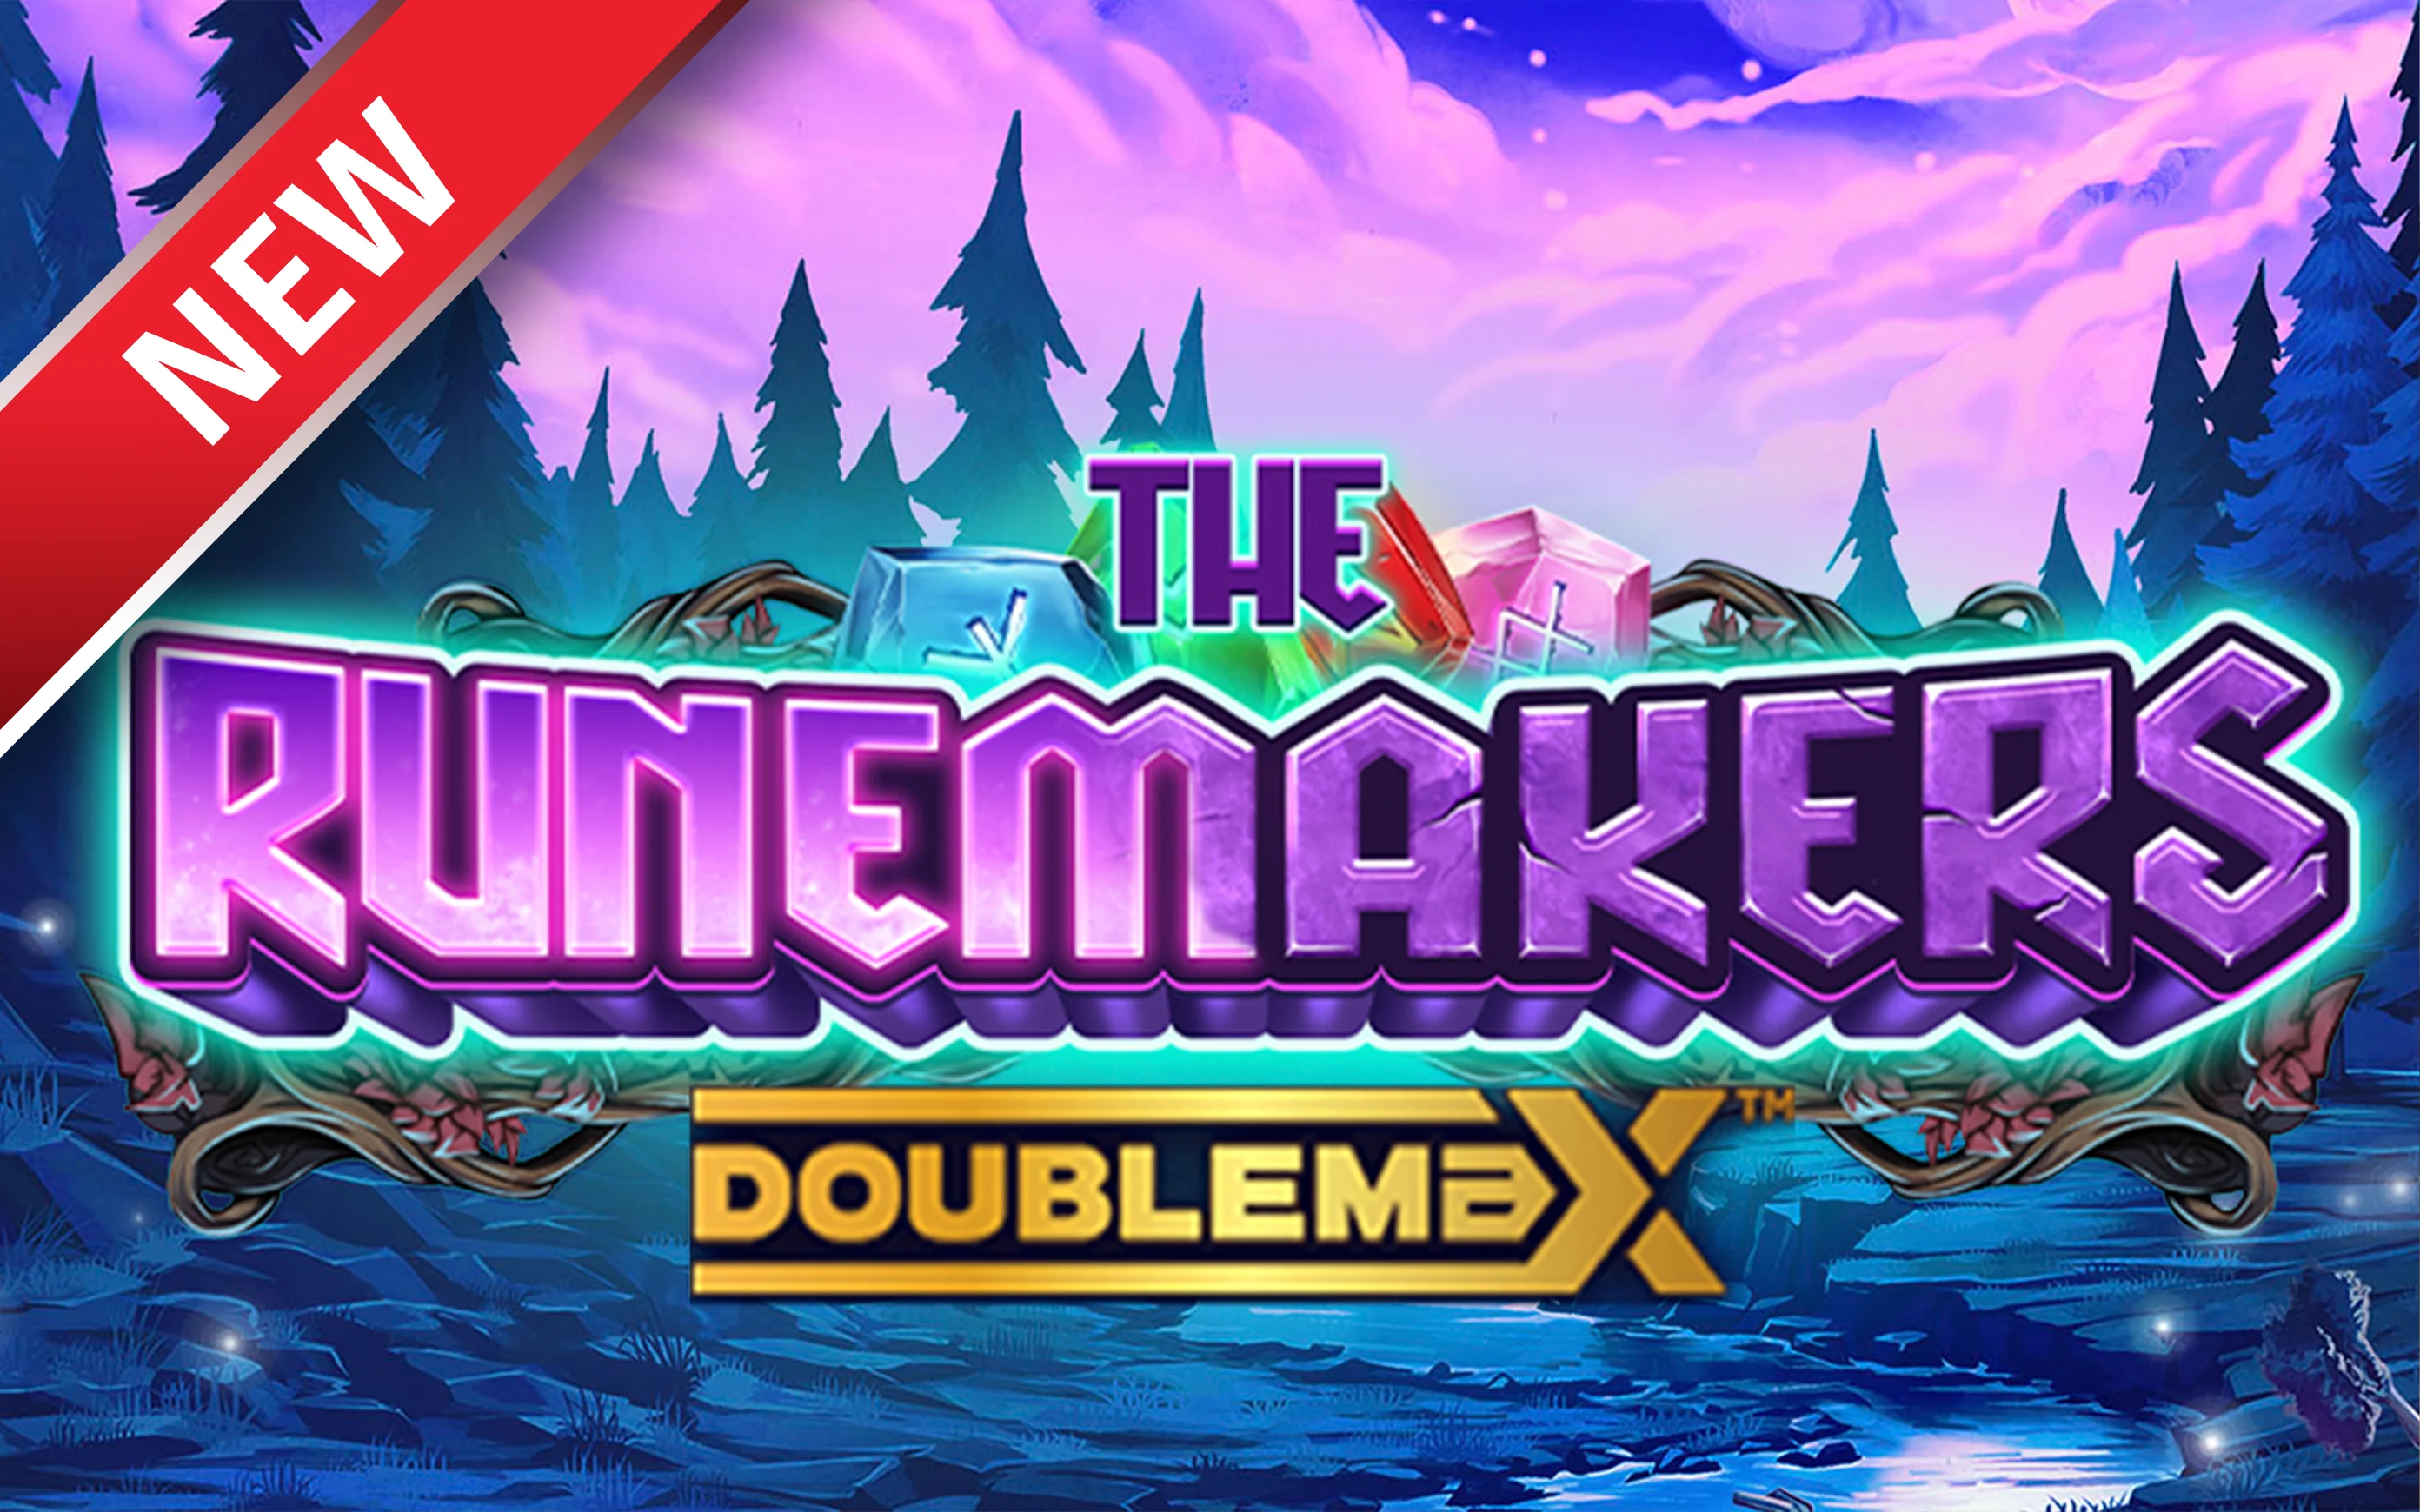 Play The Runemakers Doublemax™ on Starcasino.be online casino